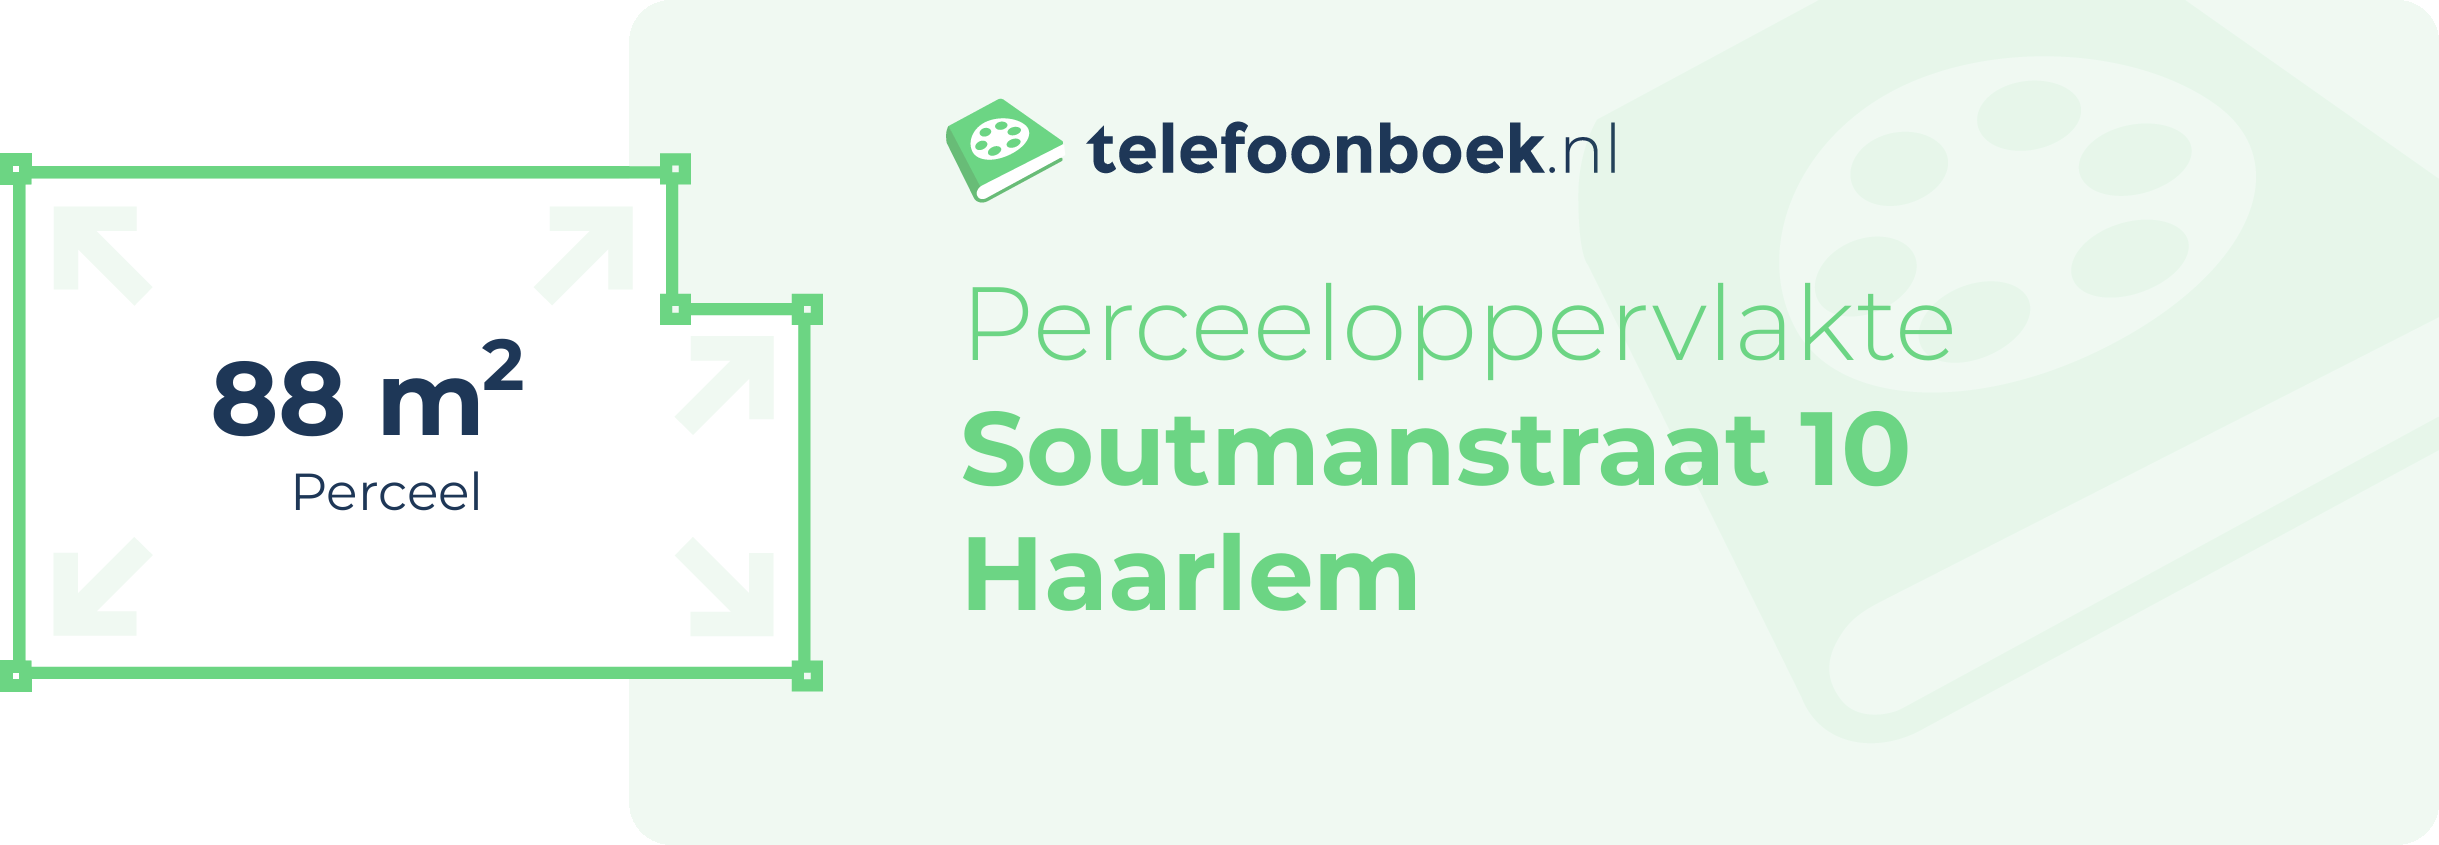 Perceeloppervlakte Soutmanstraat 10 Haarlem